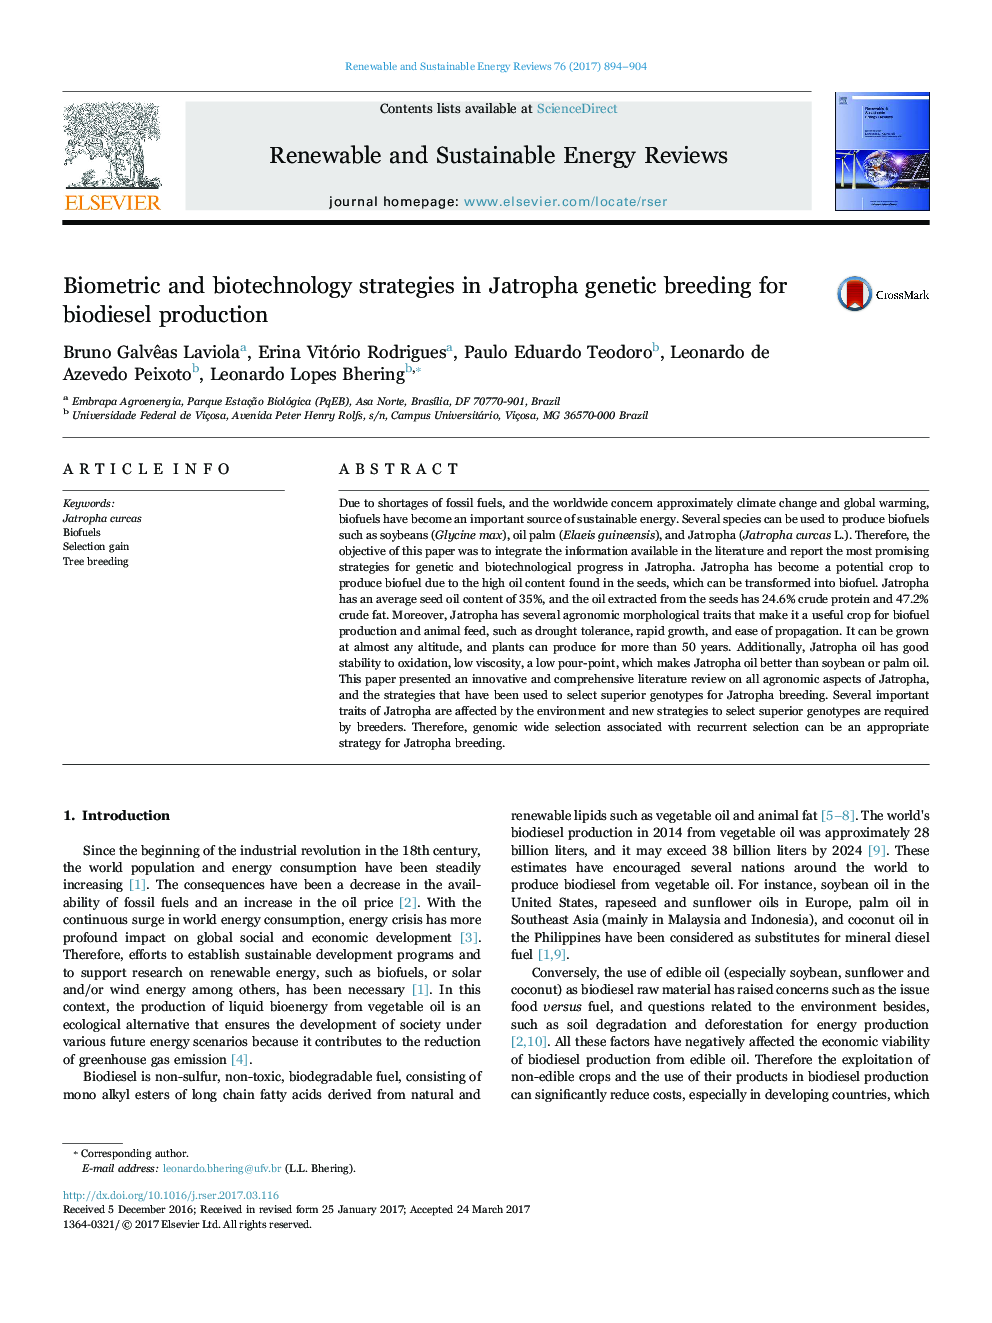 Biometric and biotechnology strategies in Jatropha genetic breeding for biodiesel production